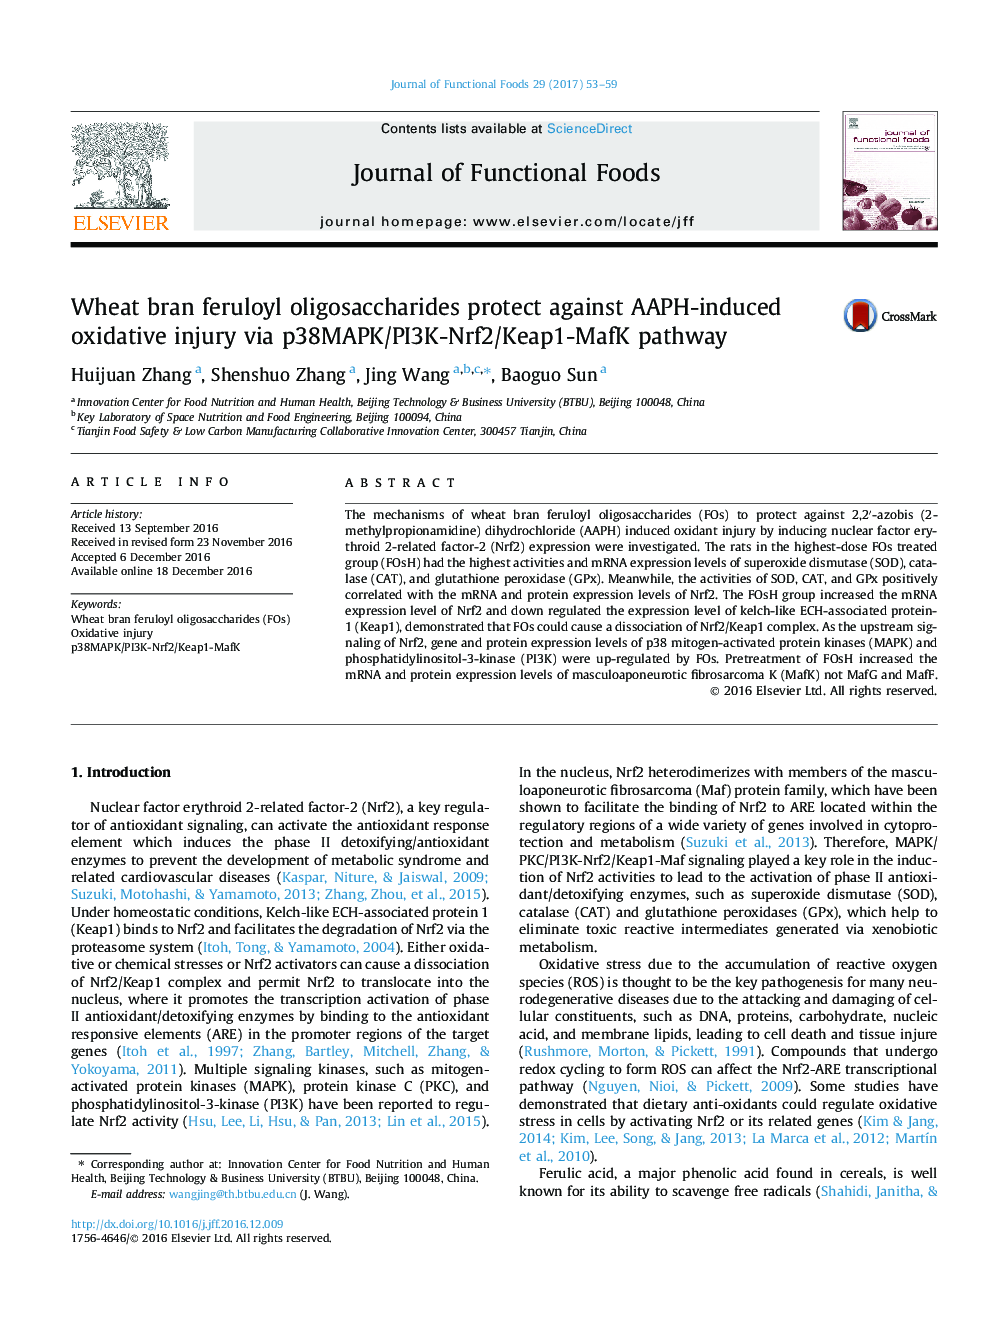 Wheat bran feruloyl oligosaccharides protect against AAPH-induced oxidative injury via p38MAPK/PI3K-Nrf2/Keap1-MafK pathway